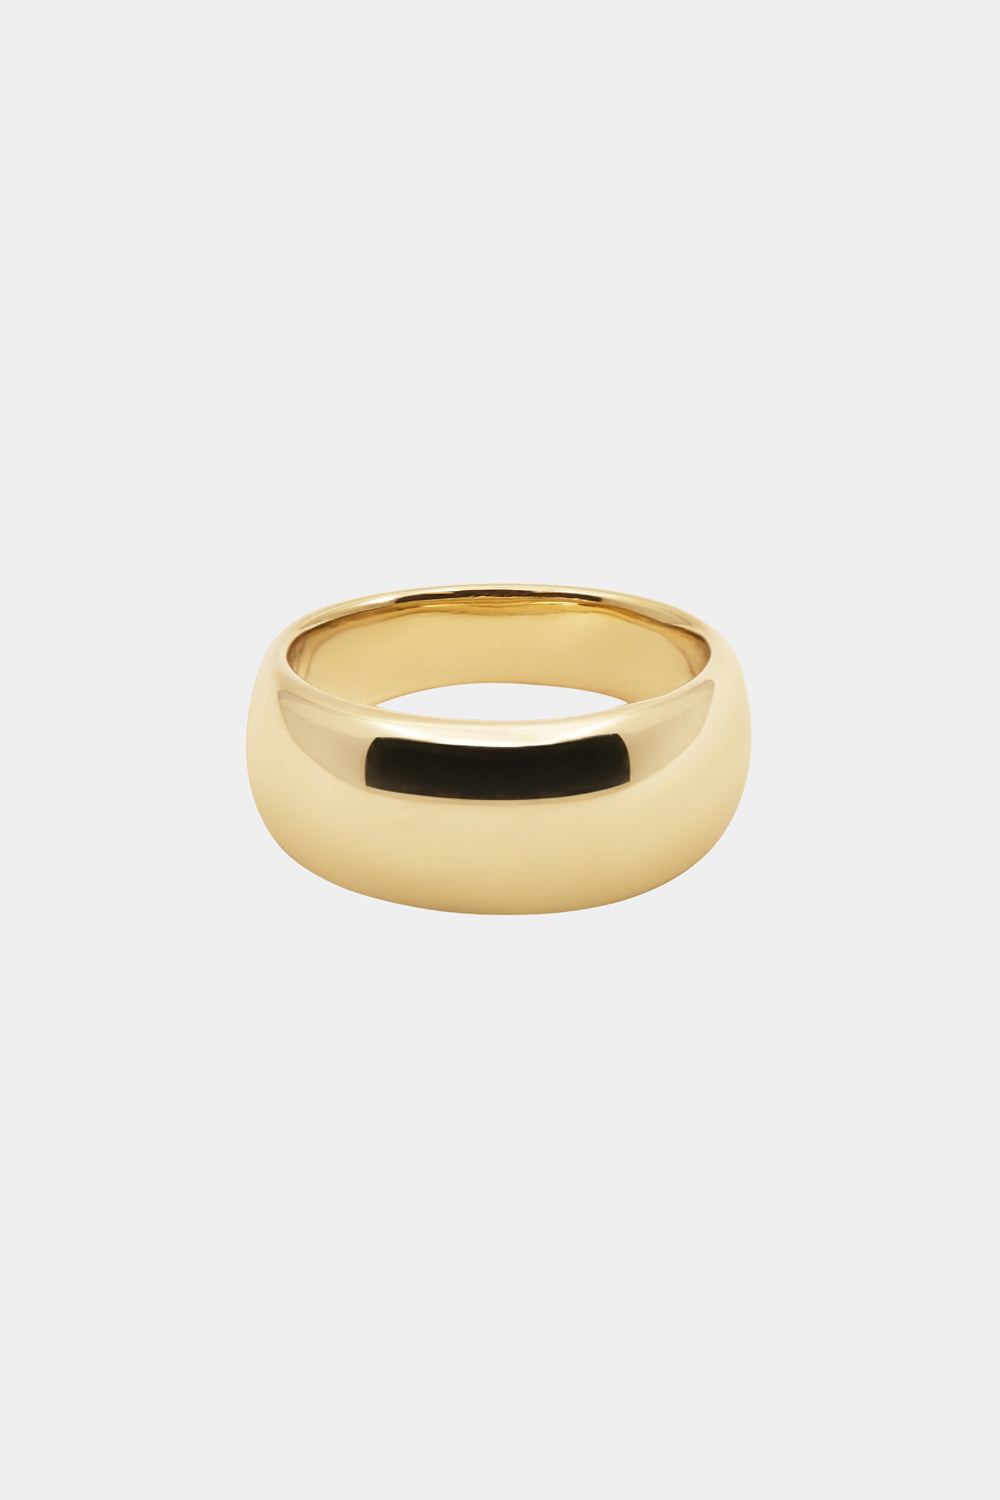 Blob Ring | Yellow Gold, More options available| Natasha Schweitzer